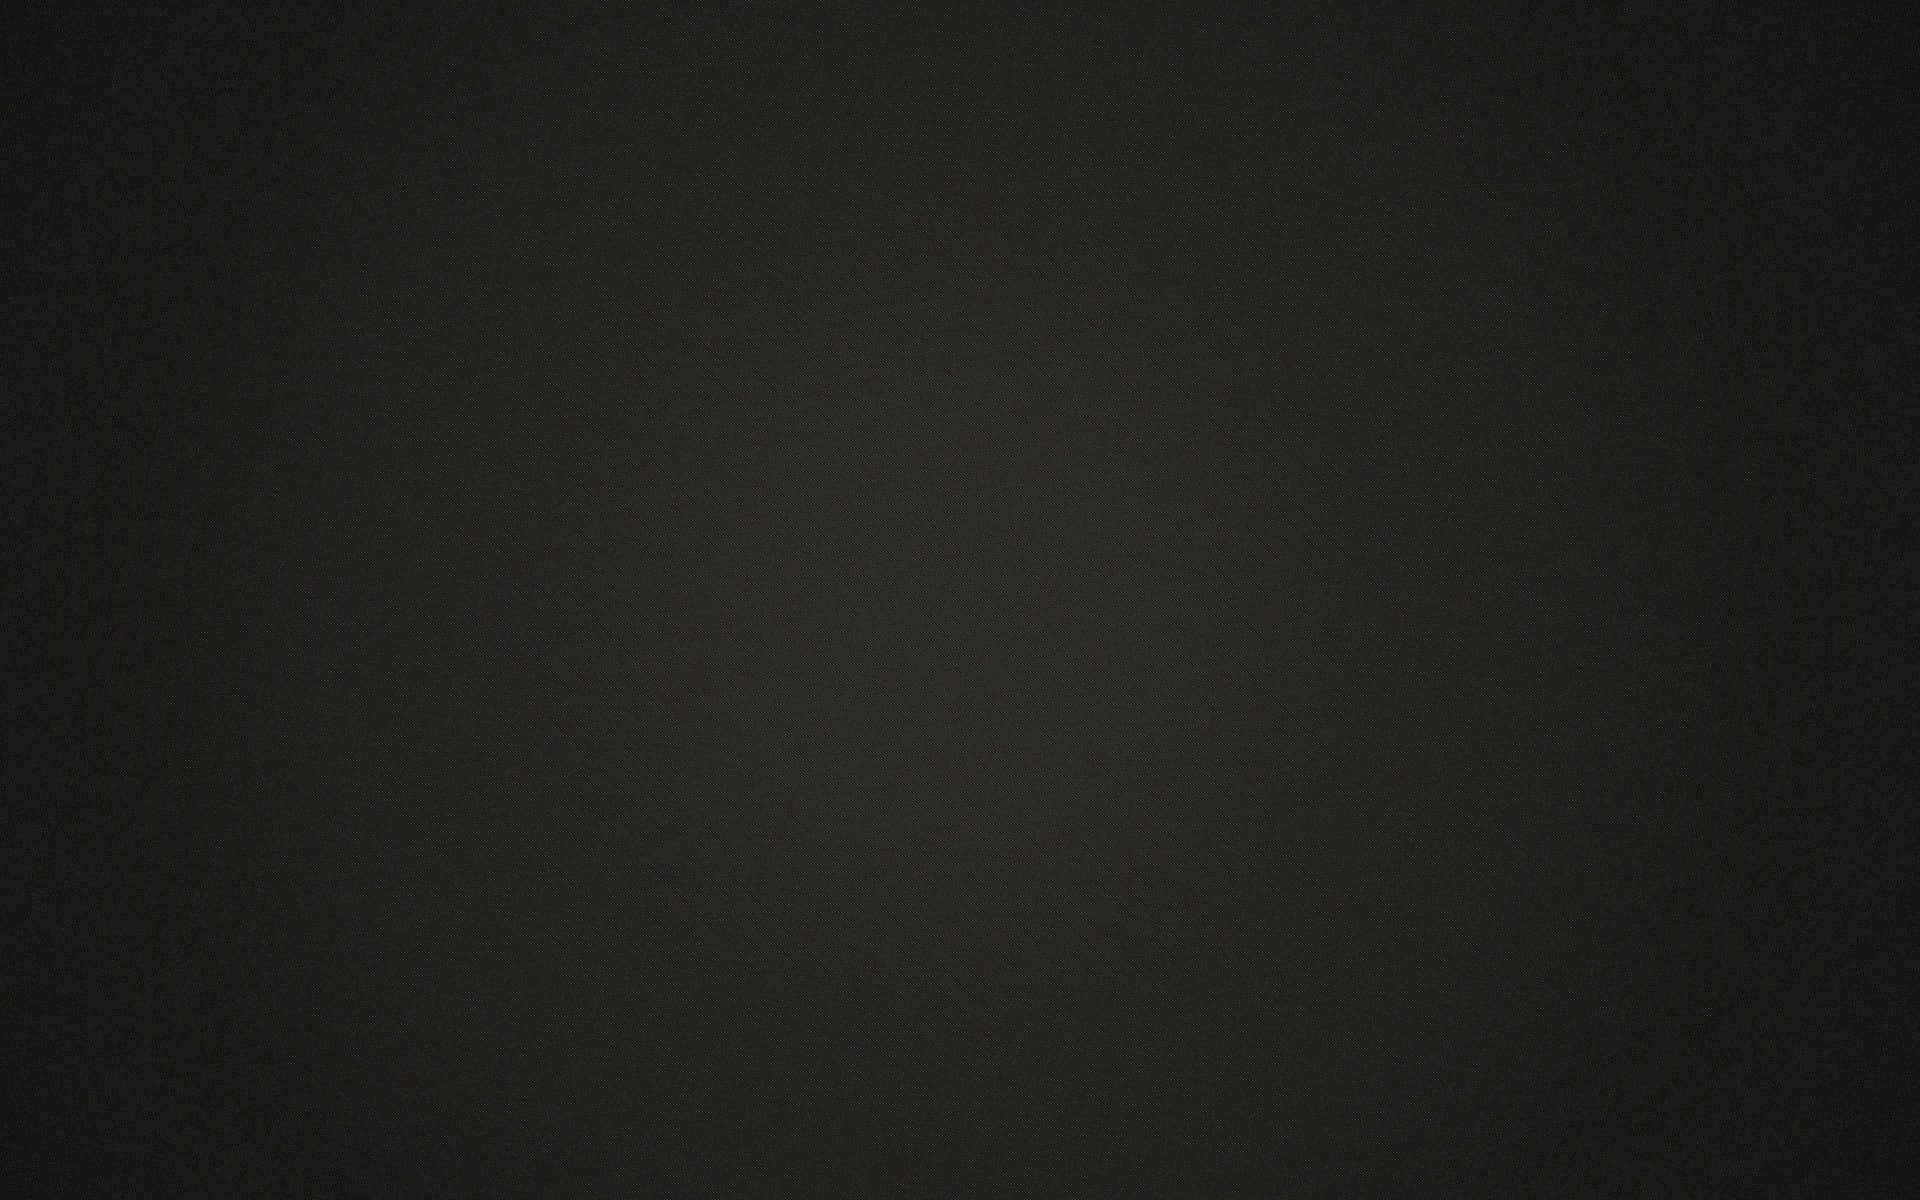 Ren og minimalistisk mørkegrå baggrund